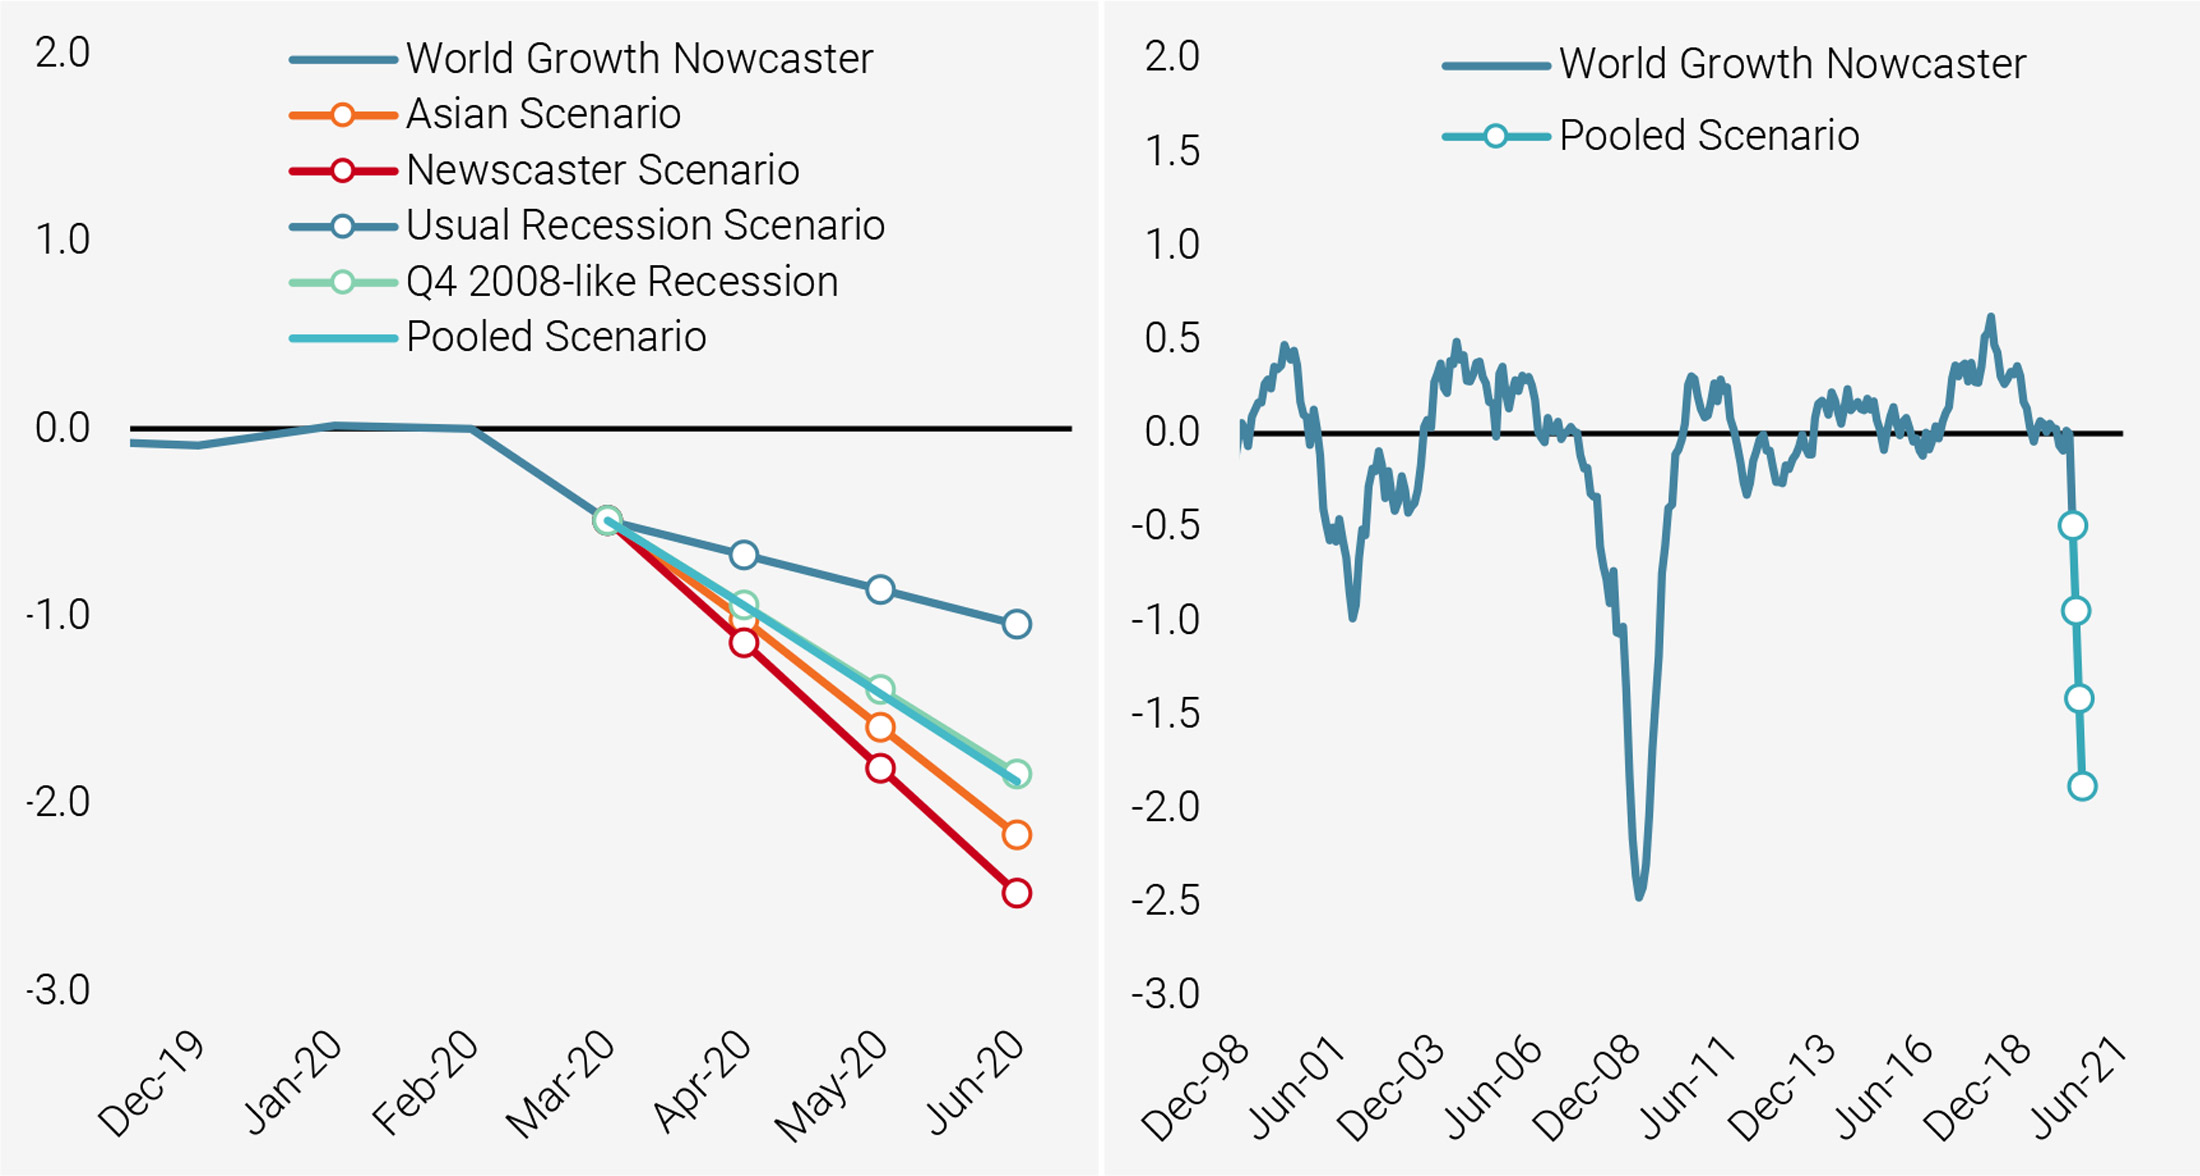 Figure 5: World Growth Nowcaster Scenario for Q4 2020